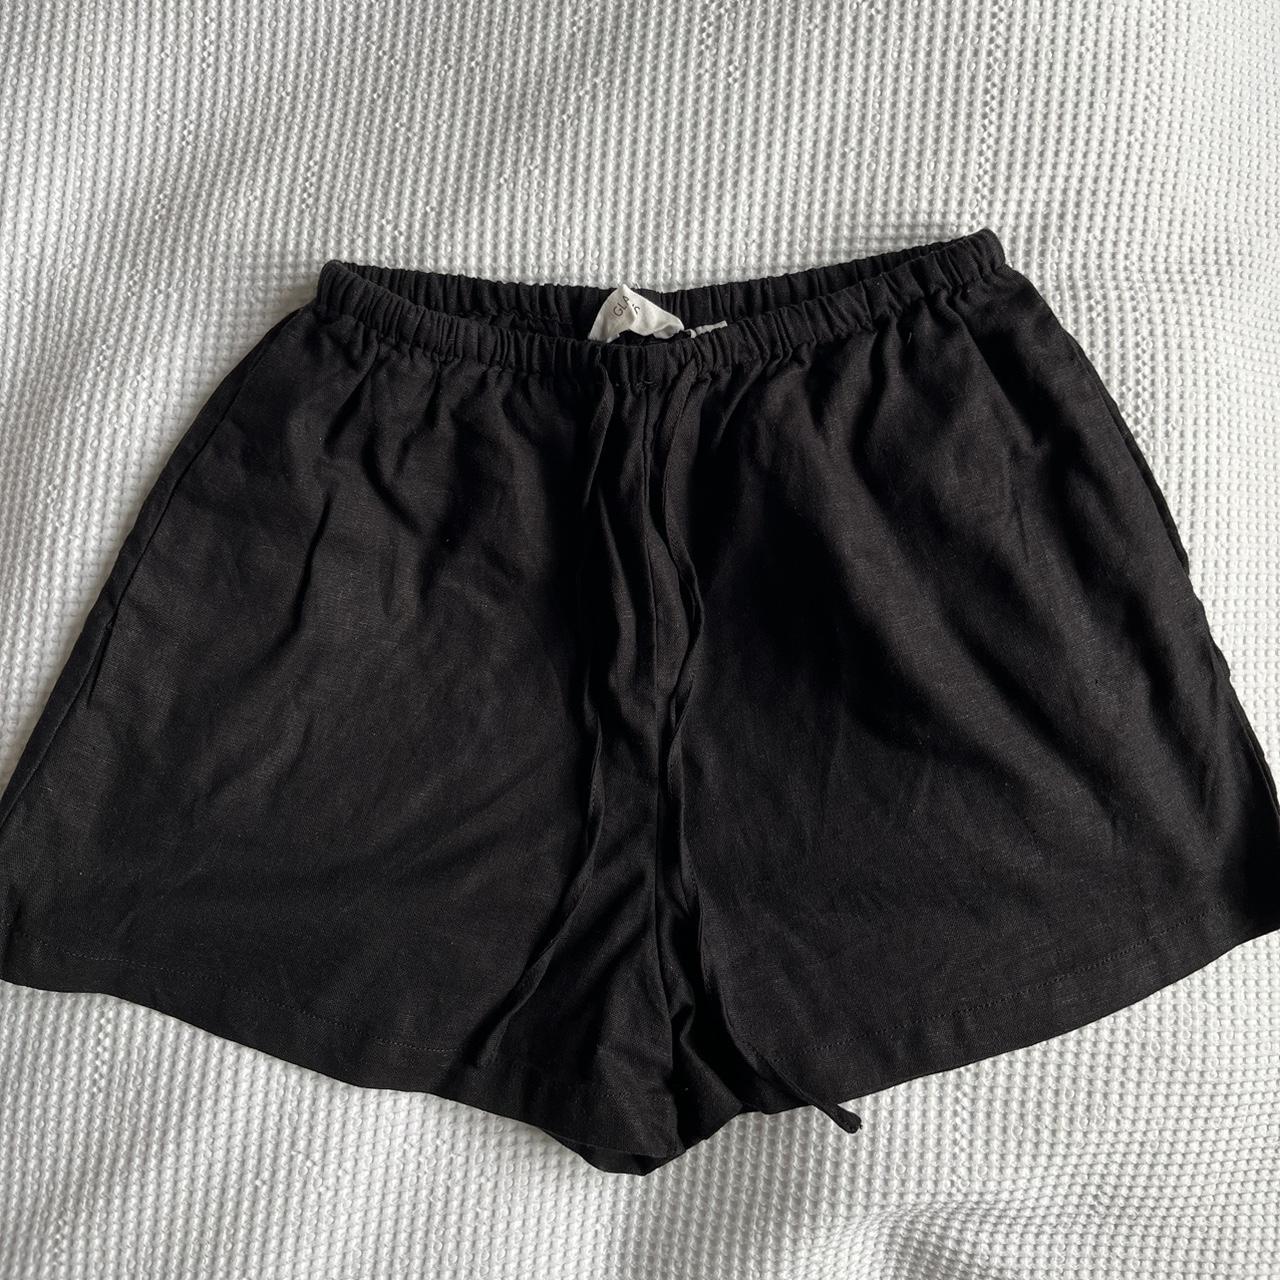 Glassons Black Linen Shorts - Only worn once - No... - Depop